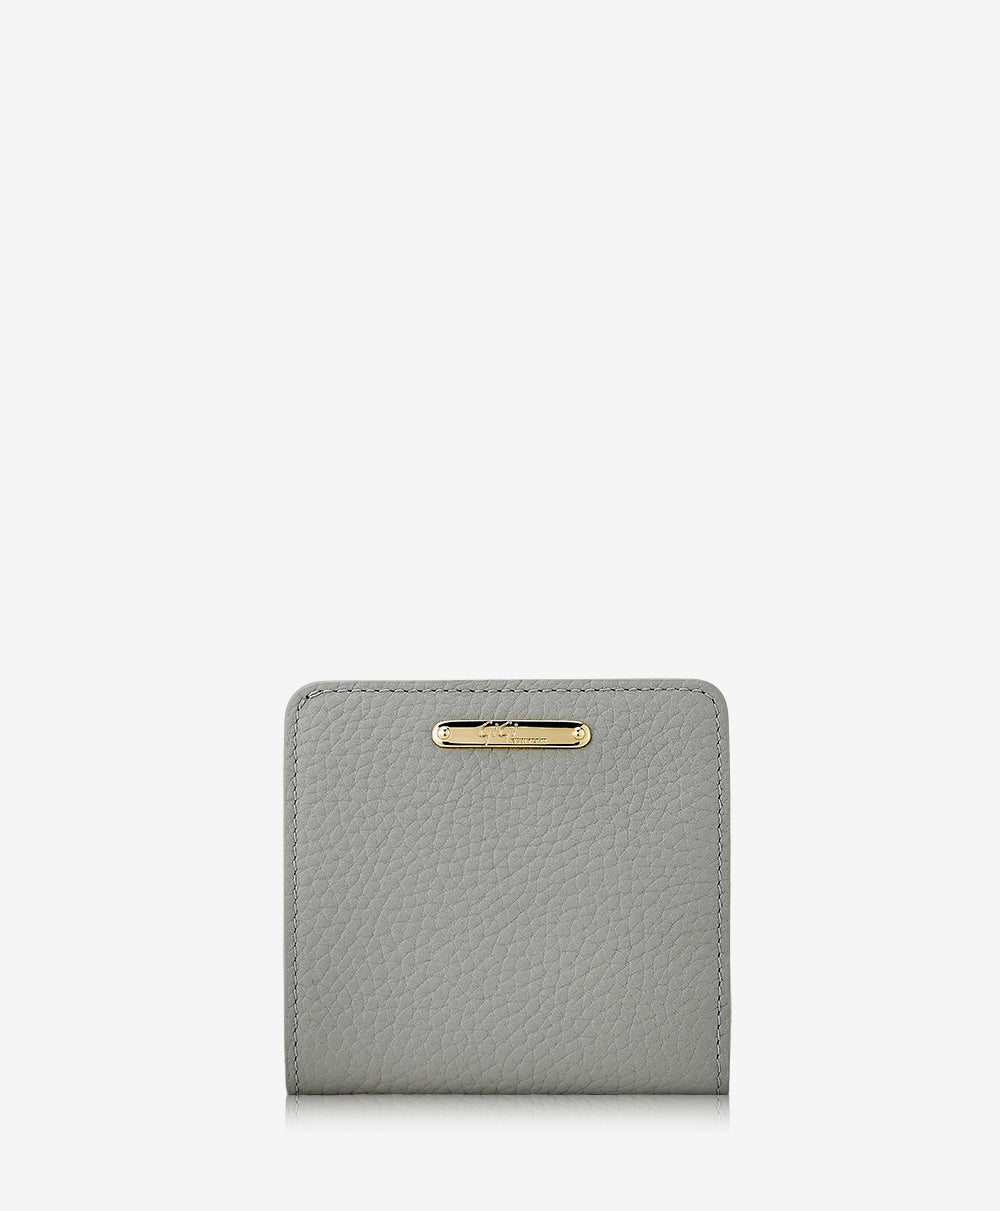 GiGi New York Mini Foldover Wallet Gray Pebble Grain Leather